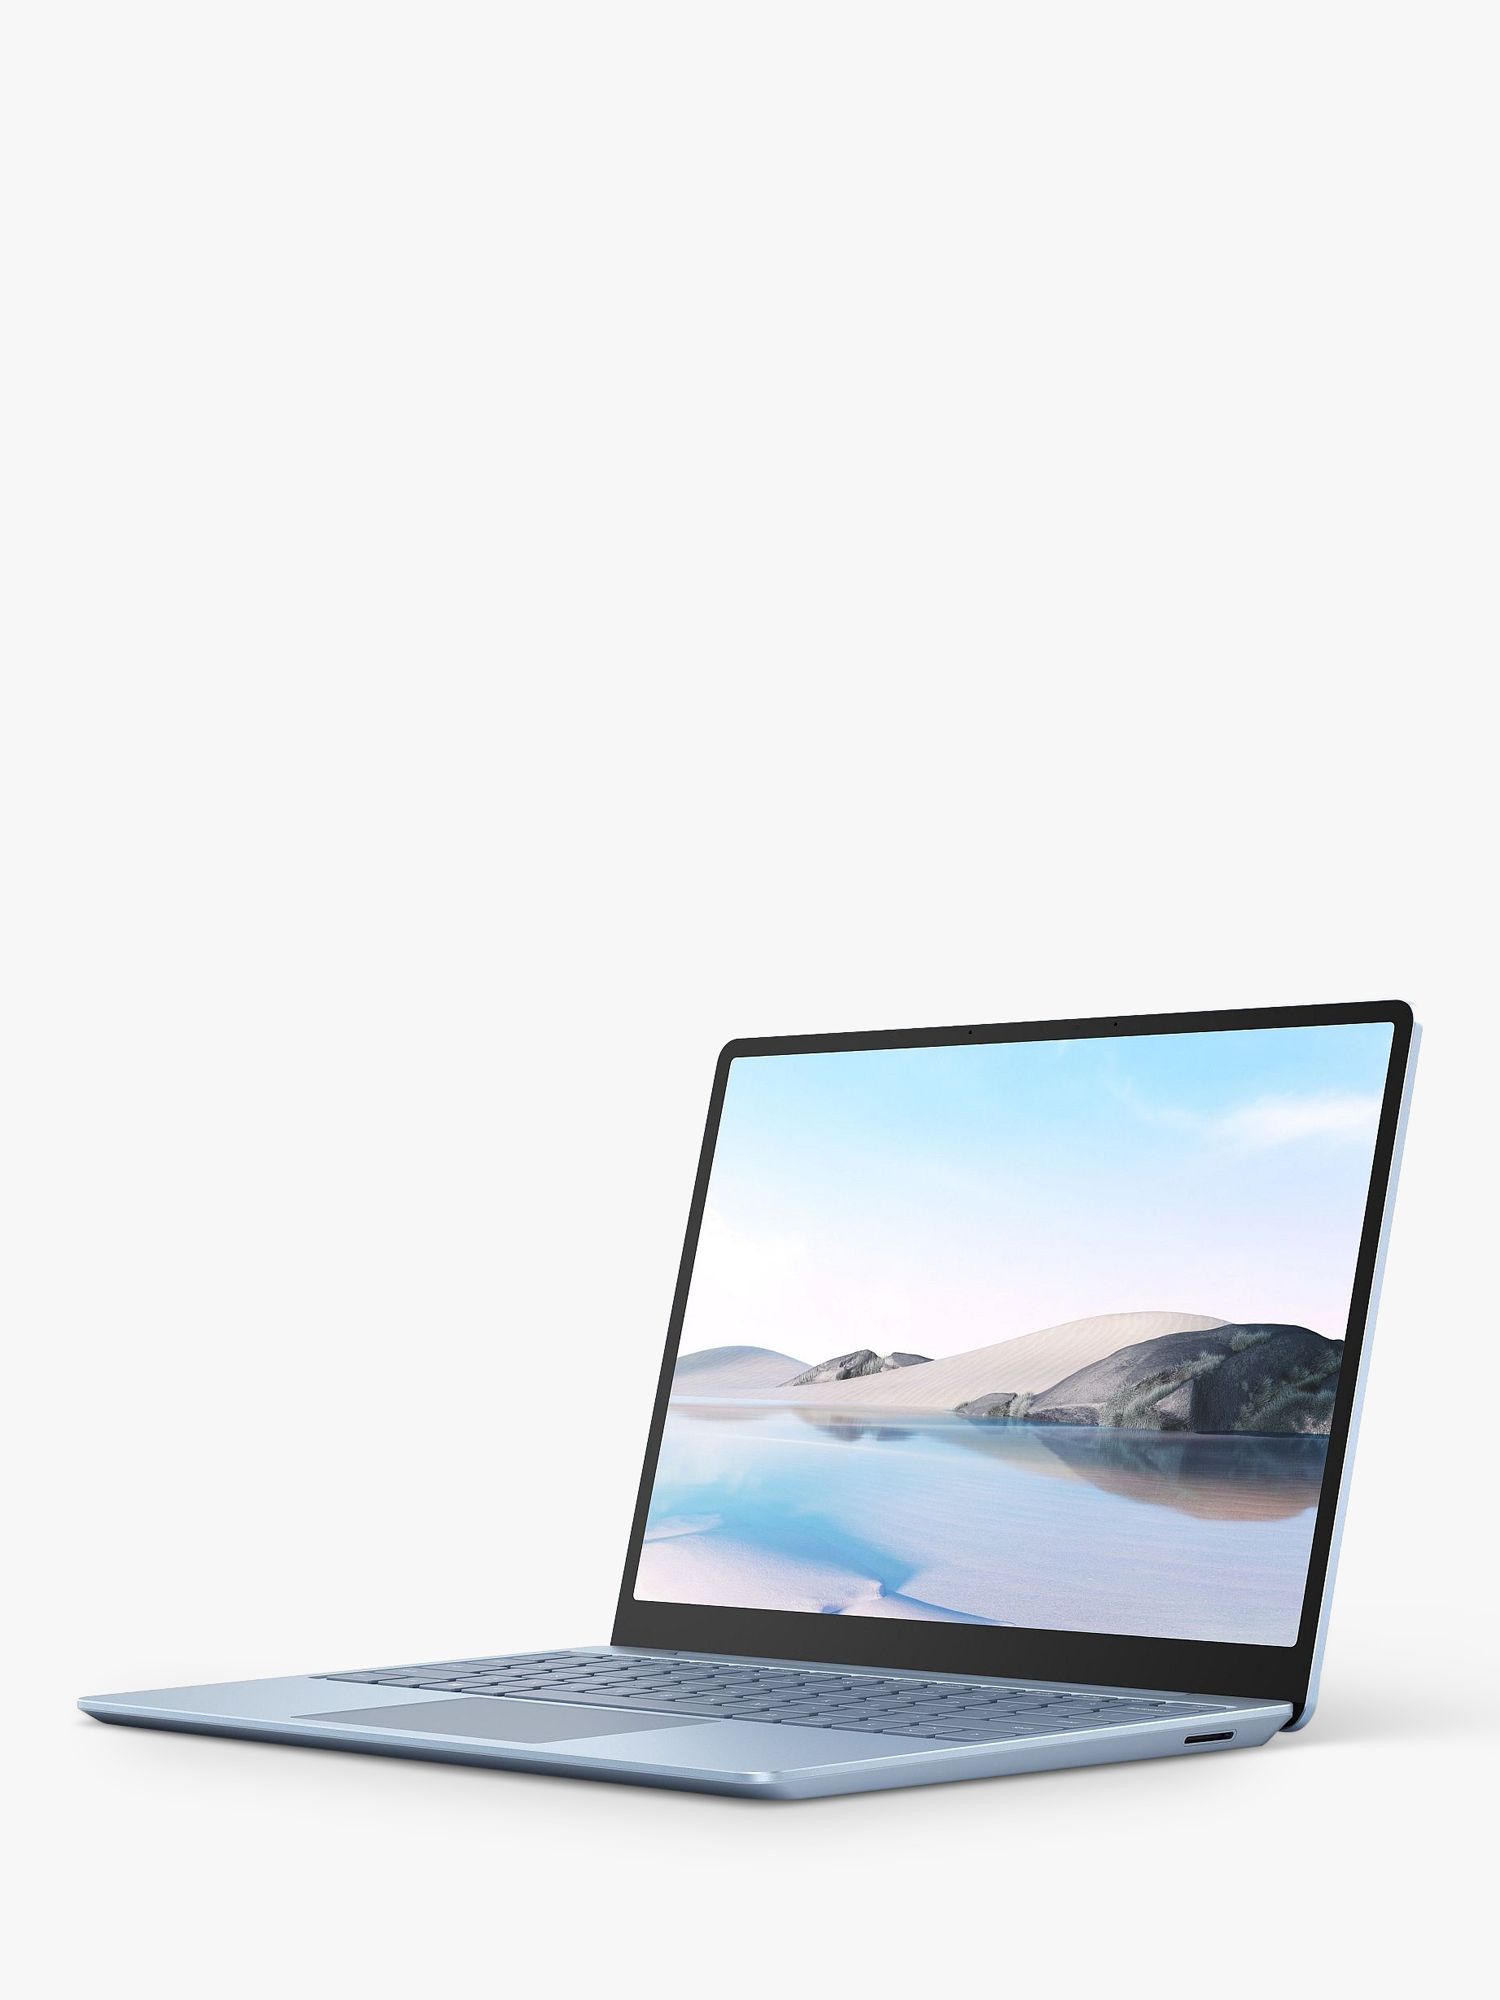 Microsoft Surface Laptop Go, Intel Core i5 Processor, 8GB RAM, 256GB SSD, 12.45 PixelSense Display